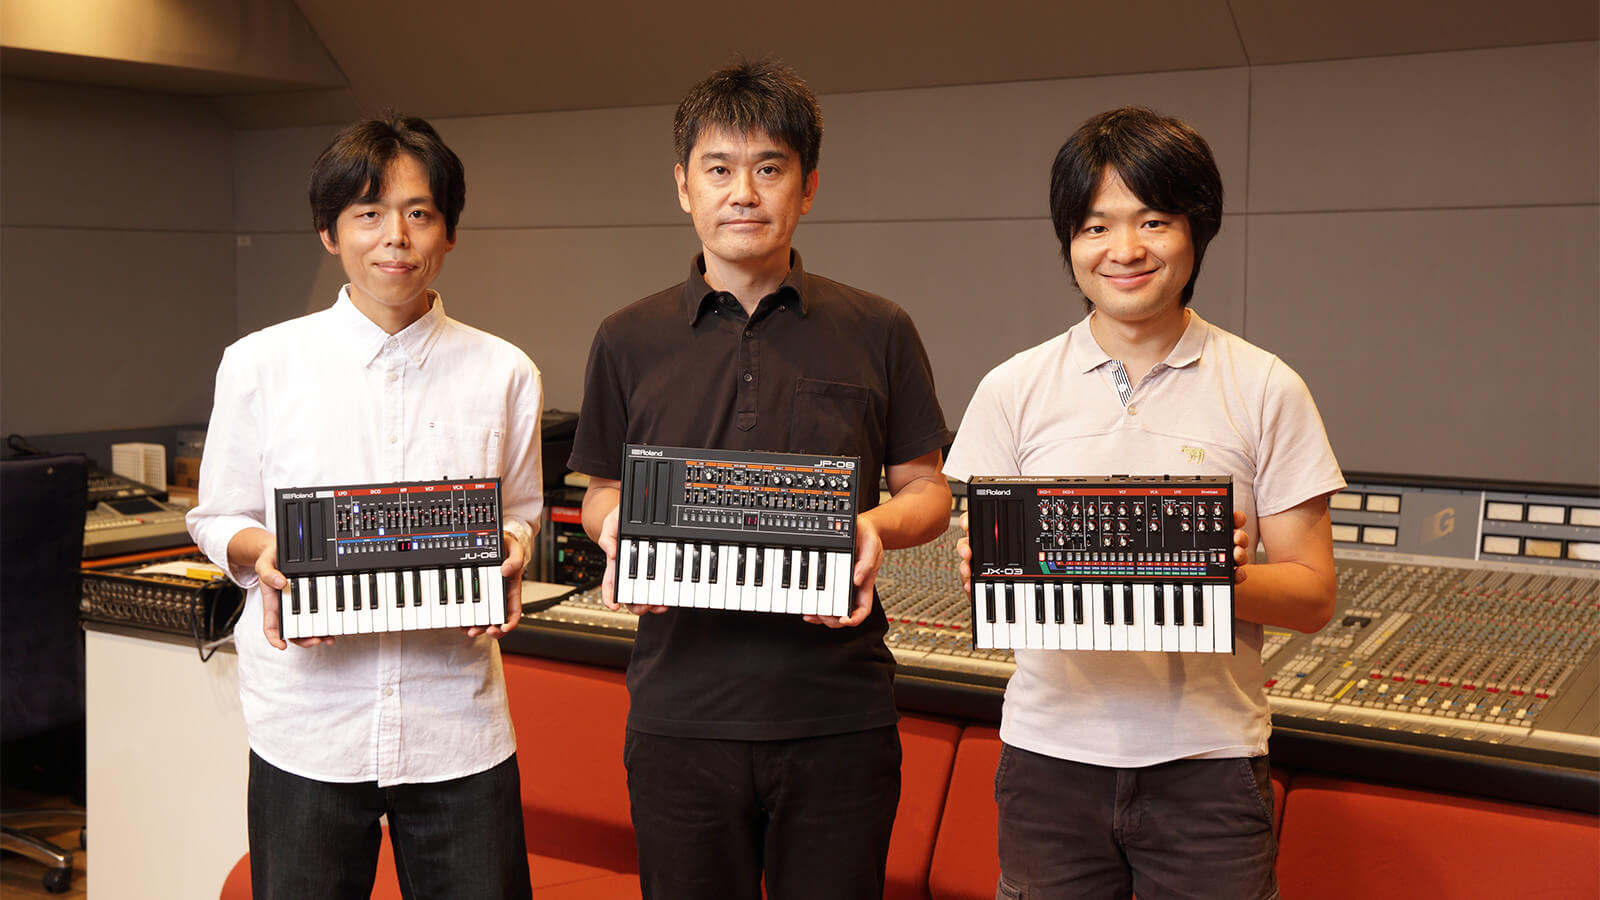 From left to right: Masato Ohnishi, Takeshi Tojo, and Hirotake Tohyama.